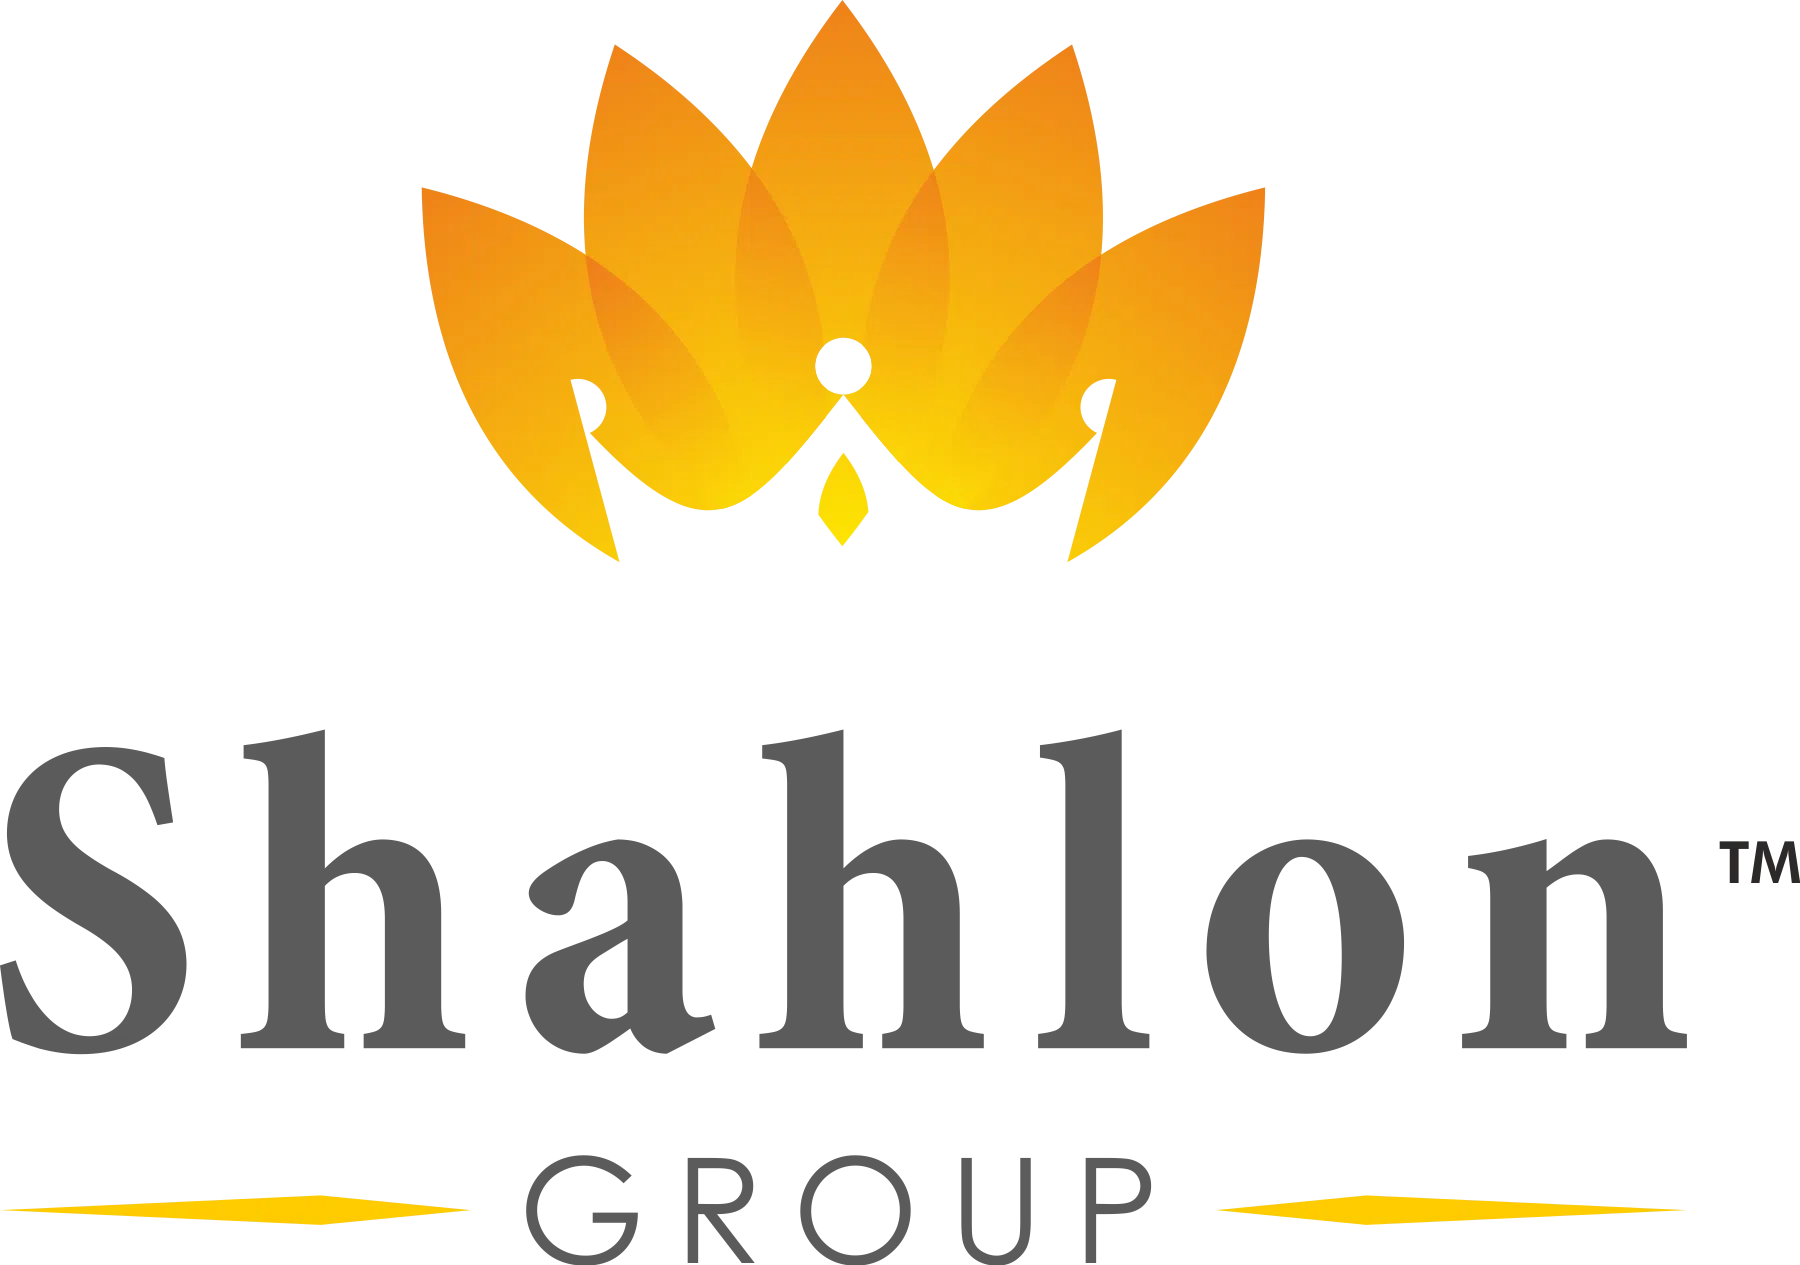 Shahlon Silk Industries Limited